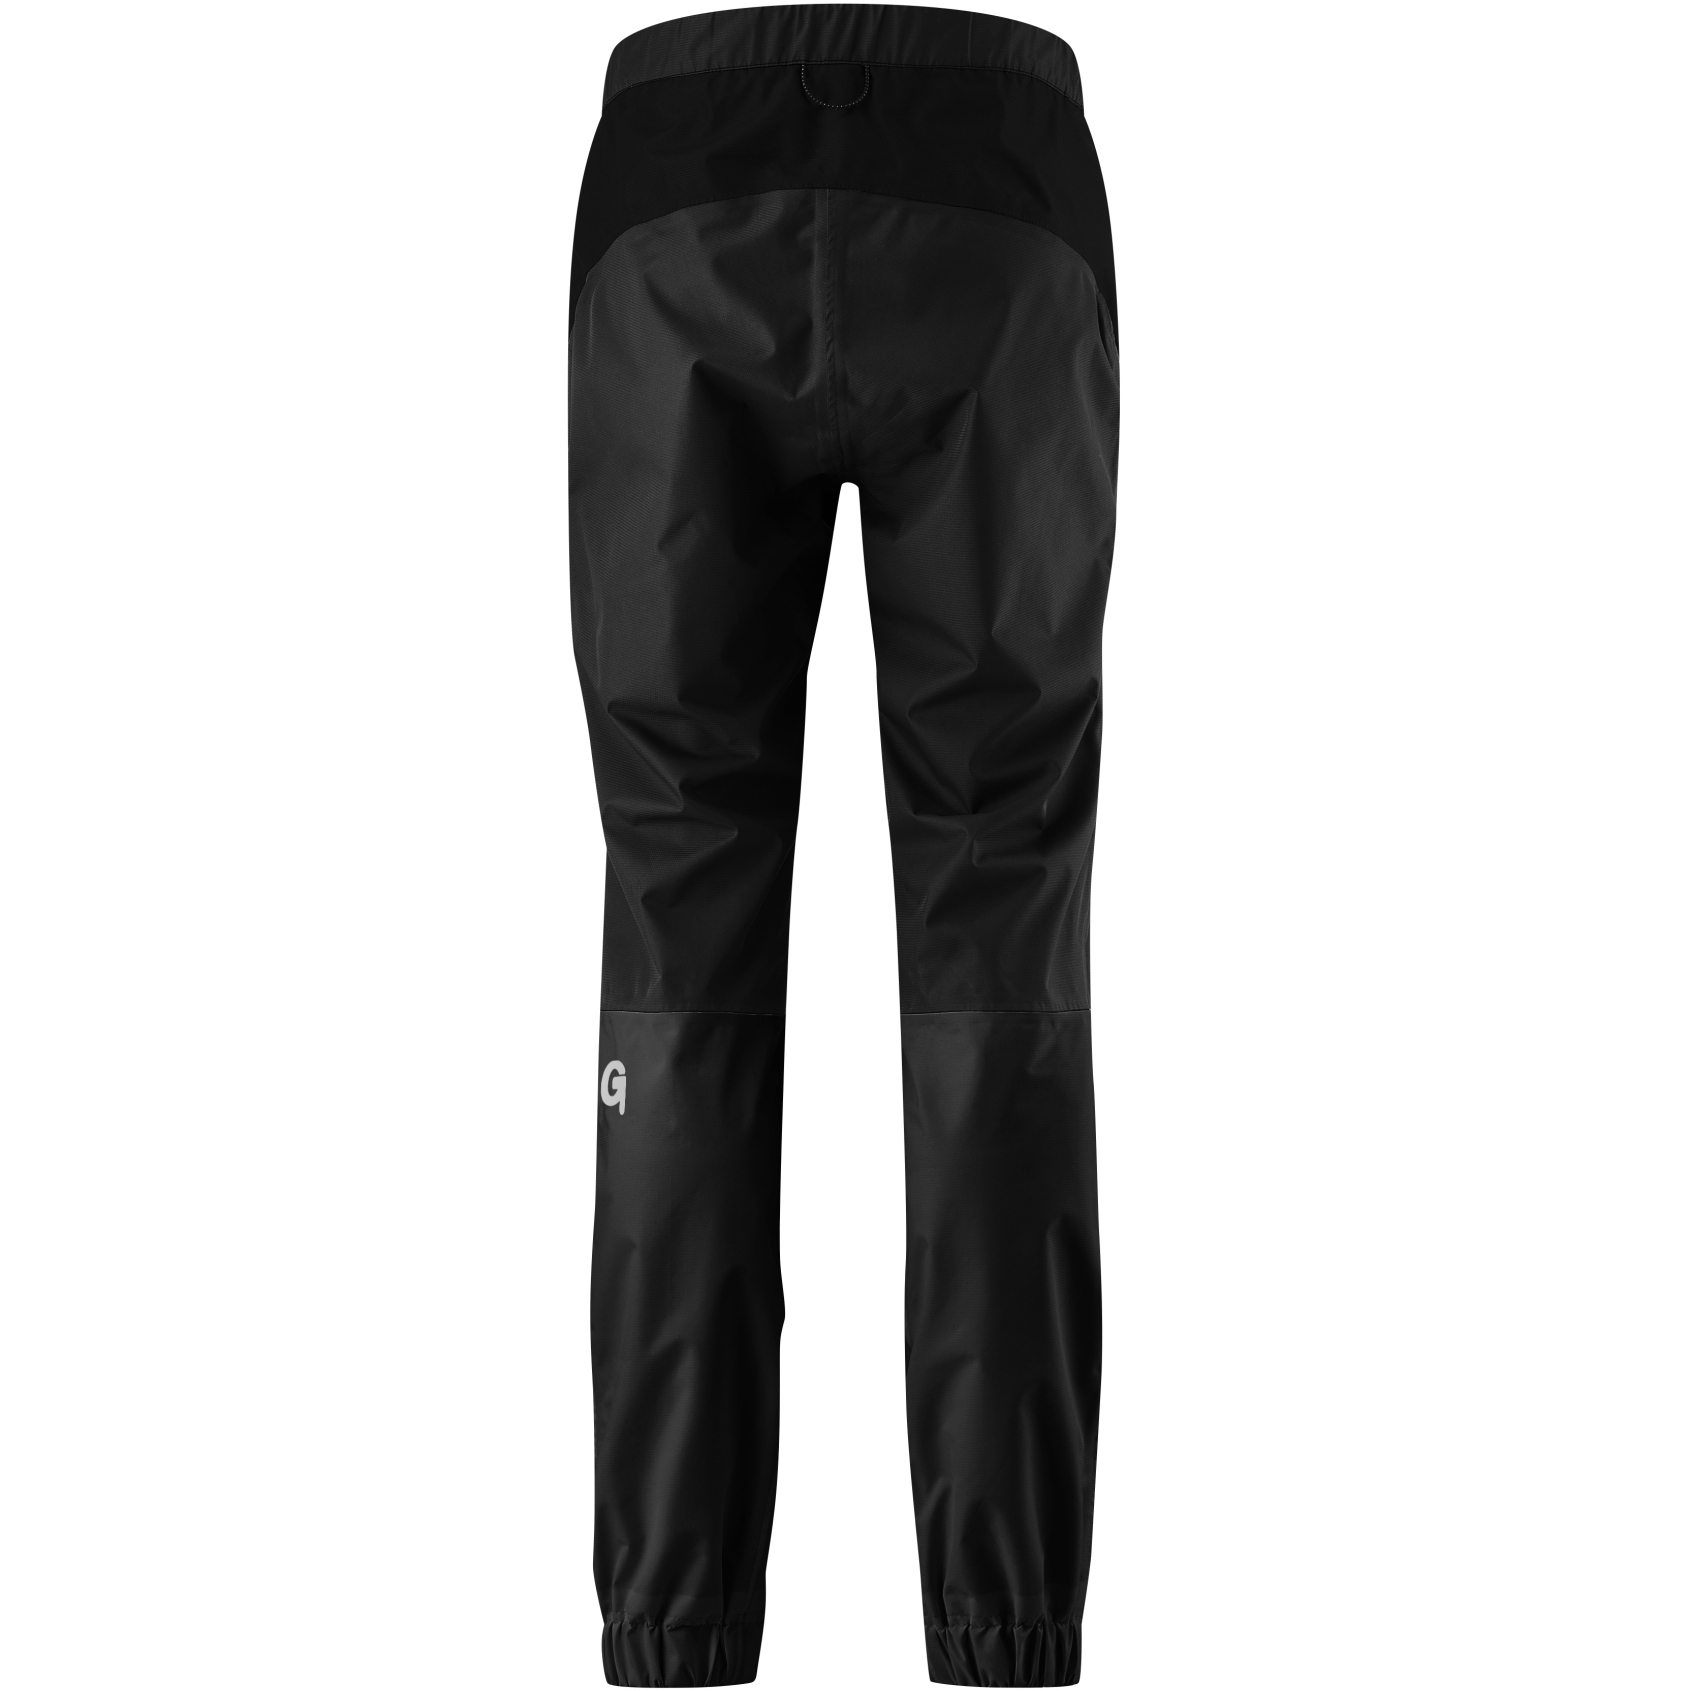 Gonso Sevo Therm All-Weather Bike Pants Unisex - Black | BIKE24